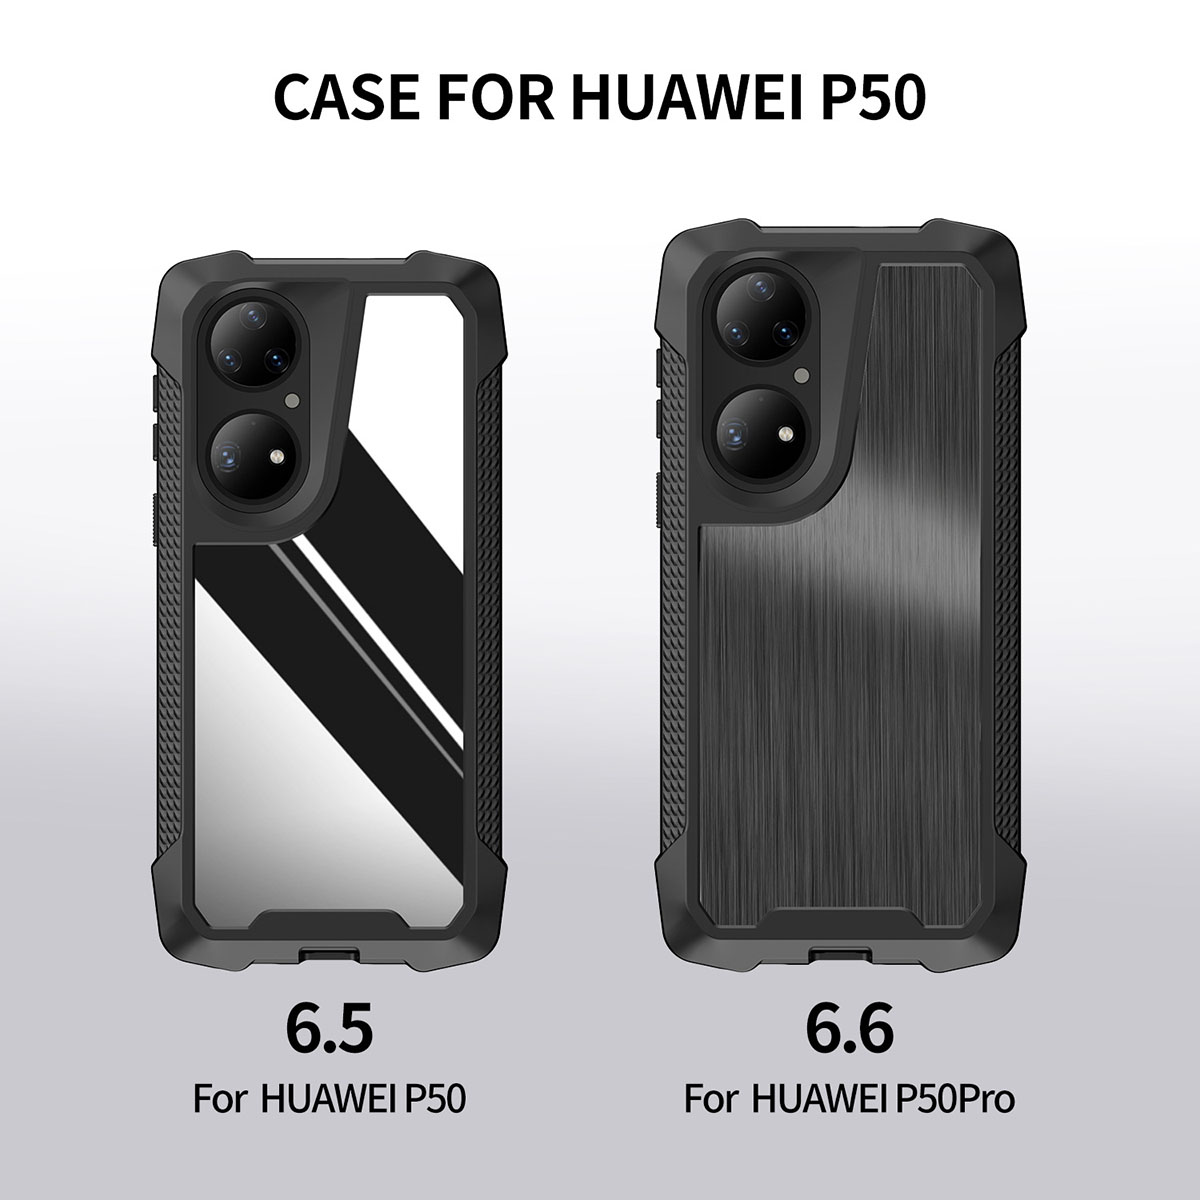 HUAWEI P50 Pro case